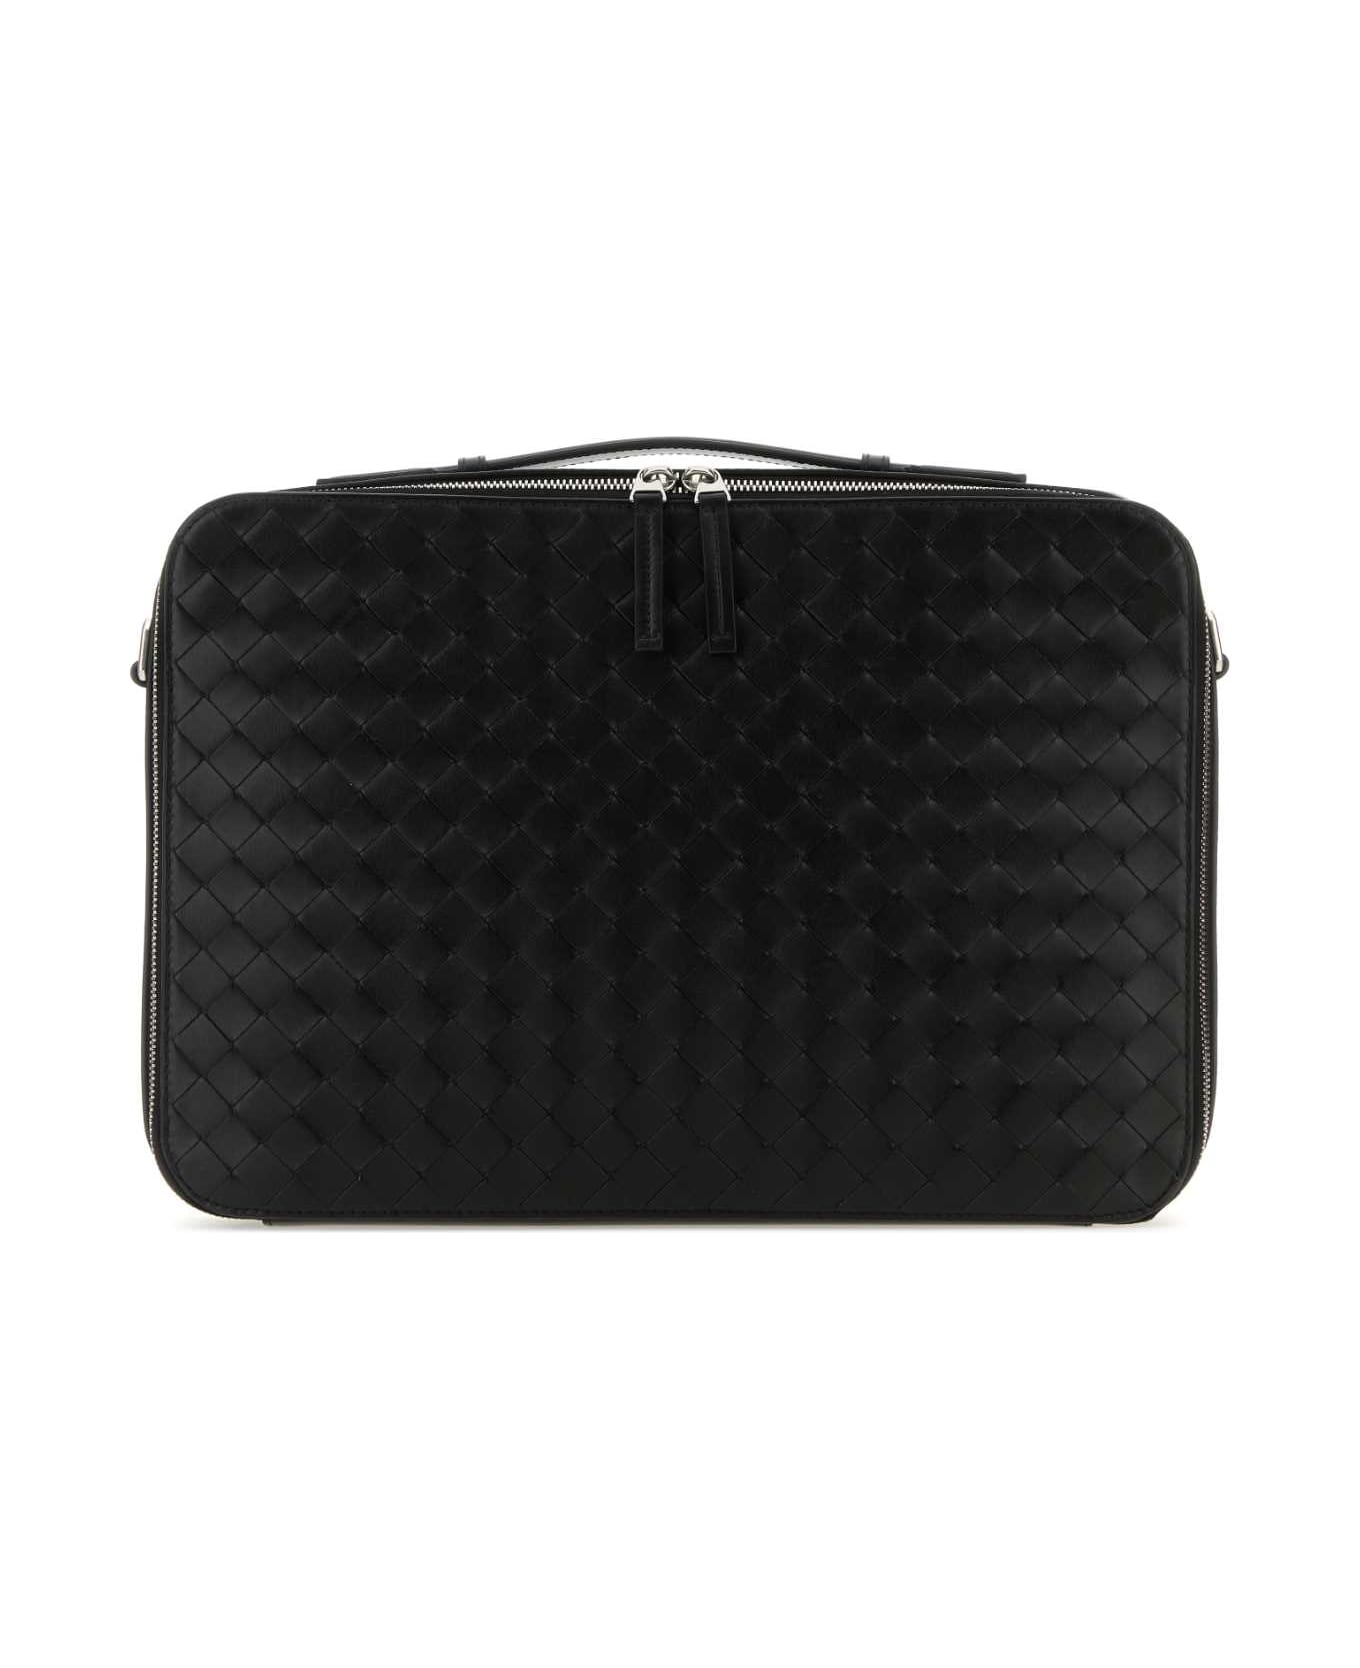 Bottega Veneta Black Leather Getaway Briefcase - BLK